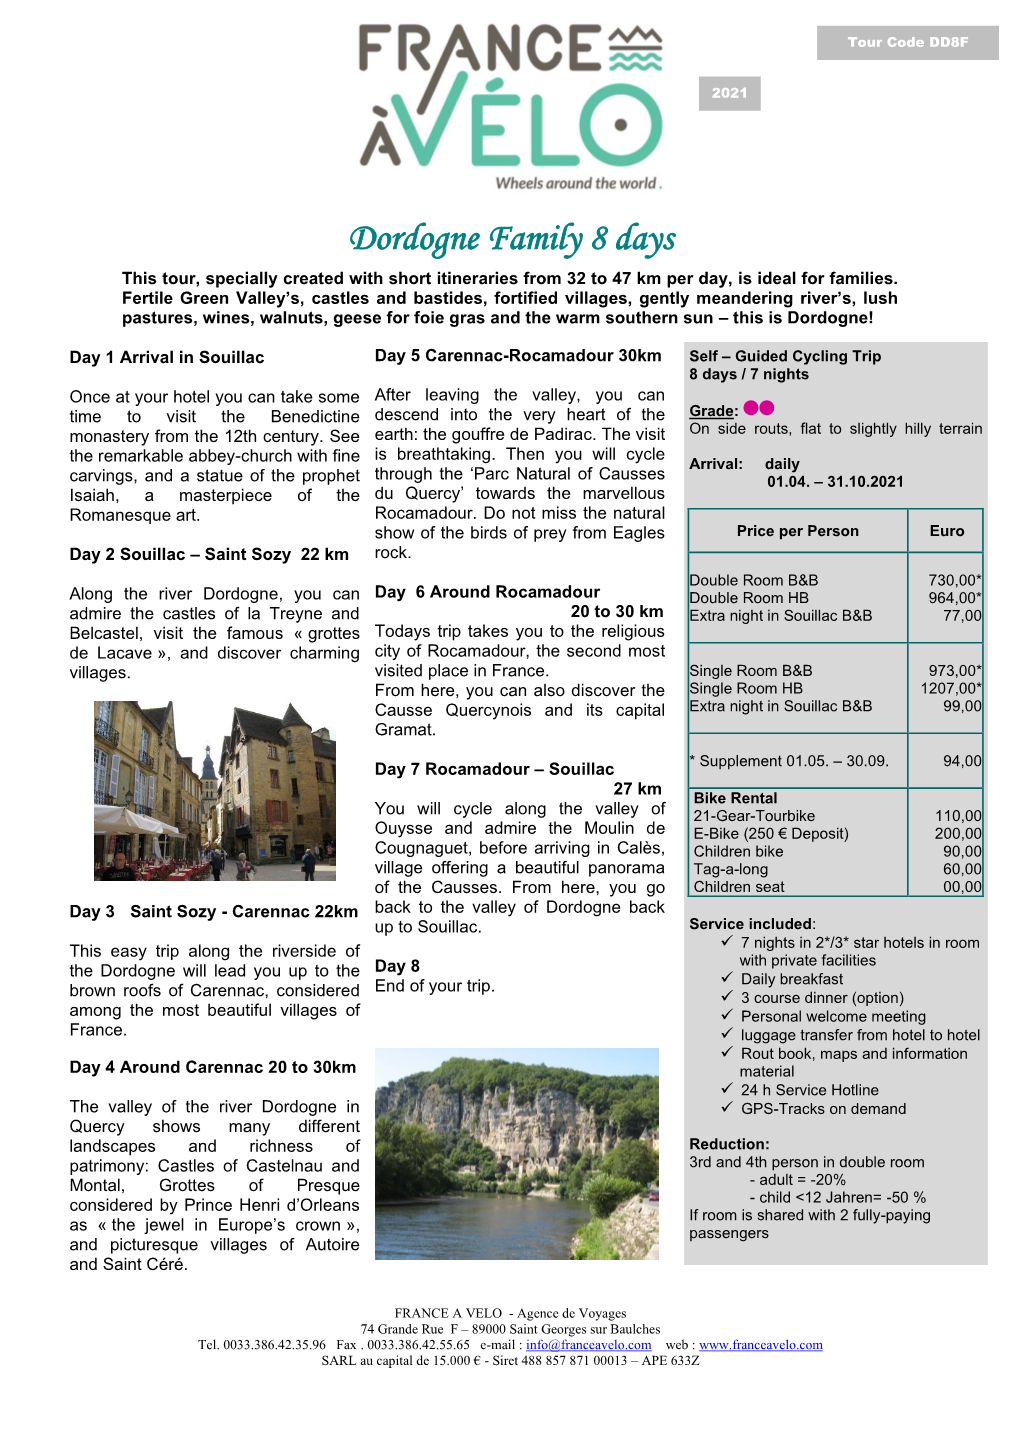 Dordogne Family 8 Days